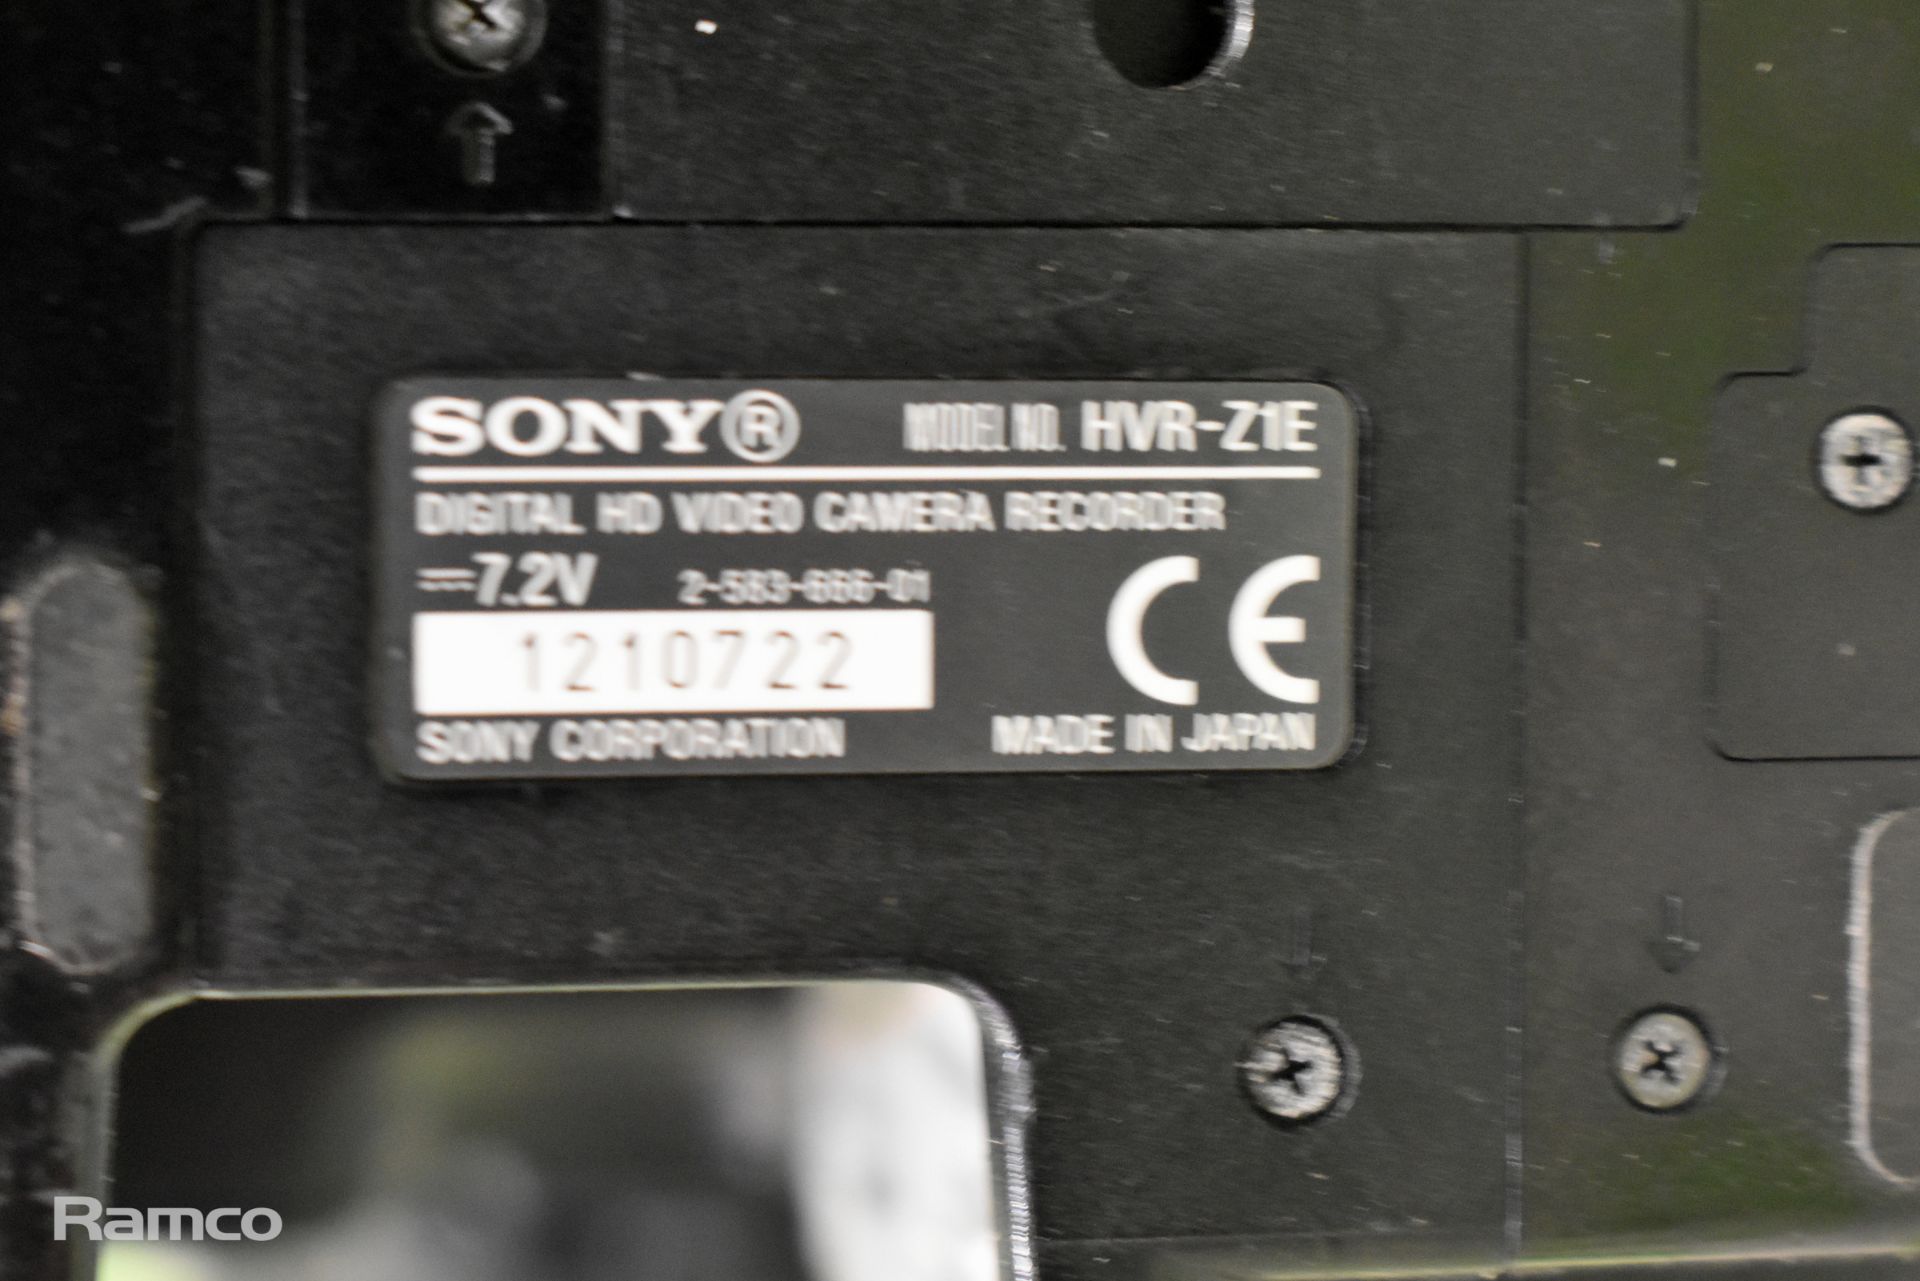 Sony HVR-Z1E HDV digital HD video camera recorder - Carl Zeiss Vario Sonnar 3CCD lens - HDV 1080i - Bild 12 aus 12